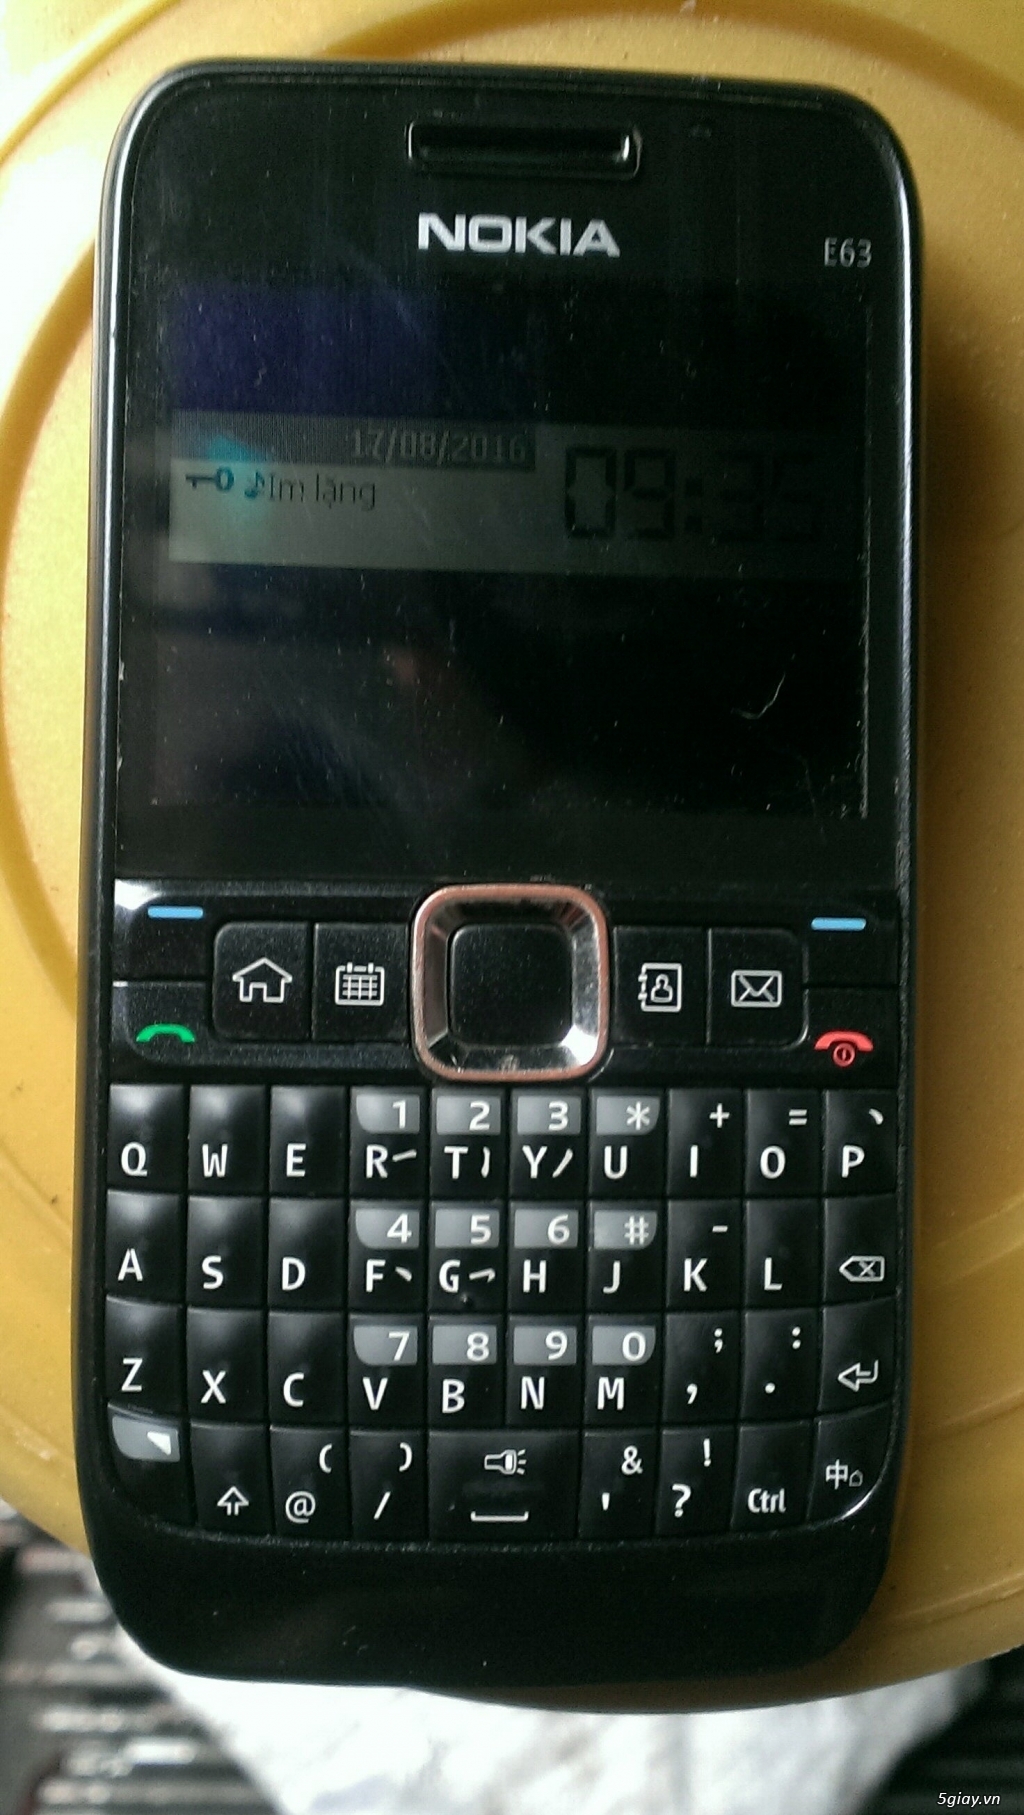 Nokia e63 full zin đẹp sưu tầm - 2